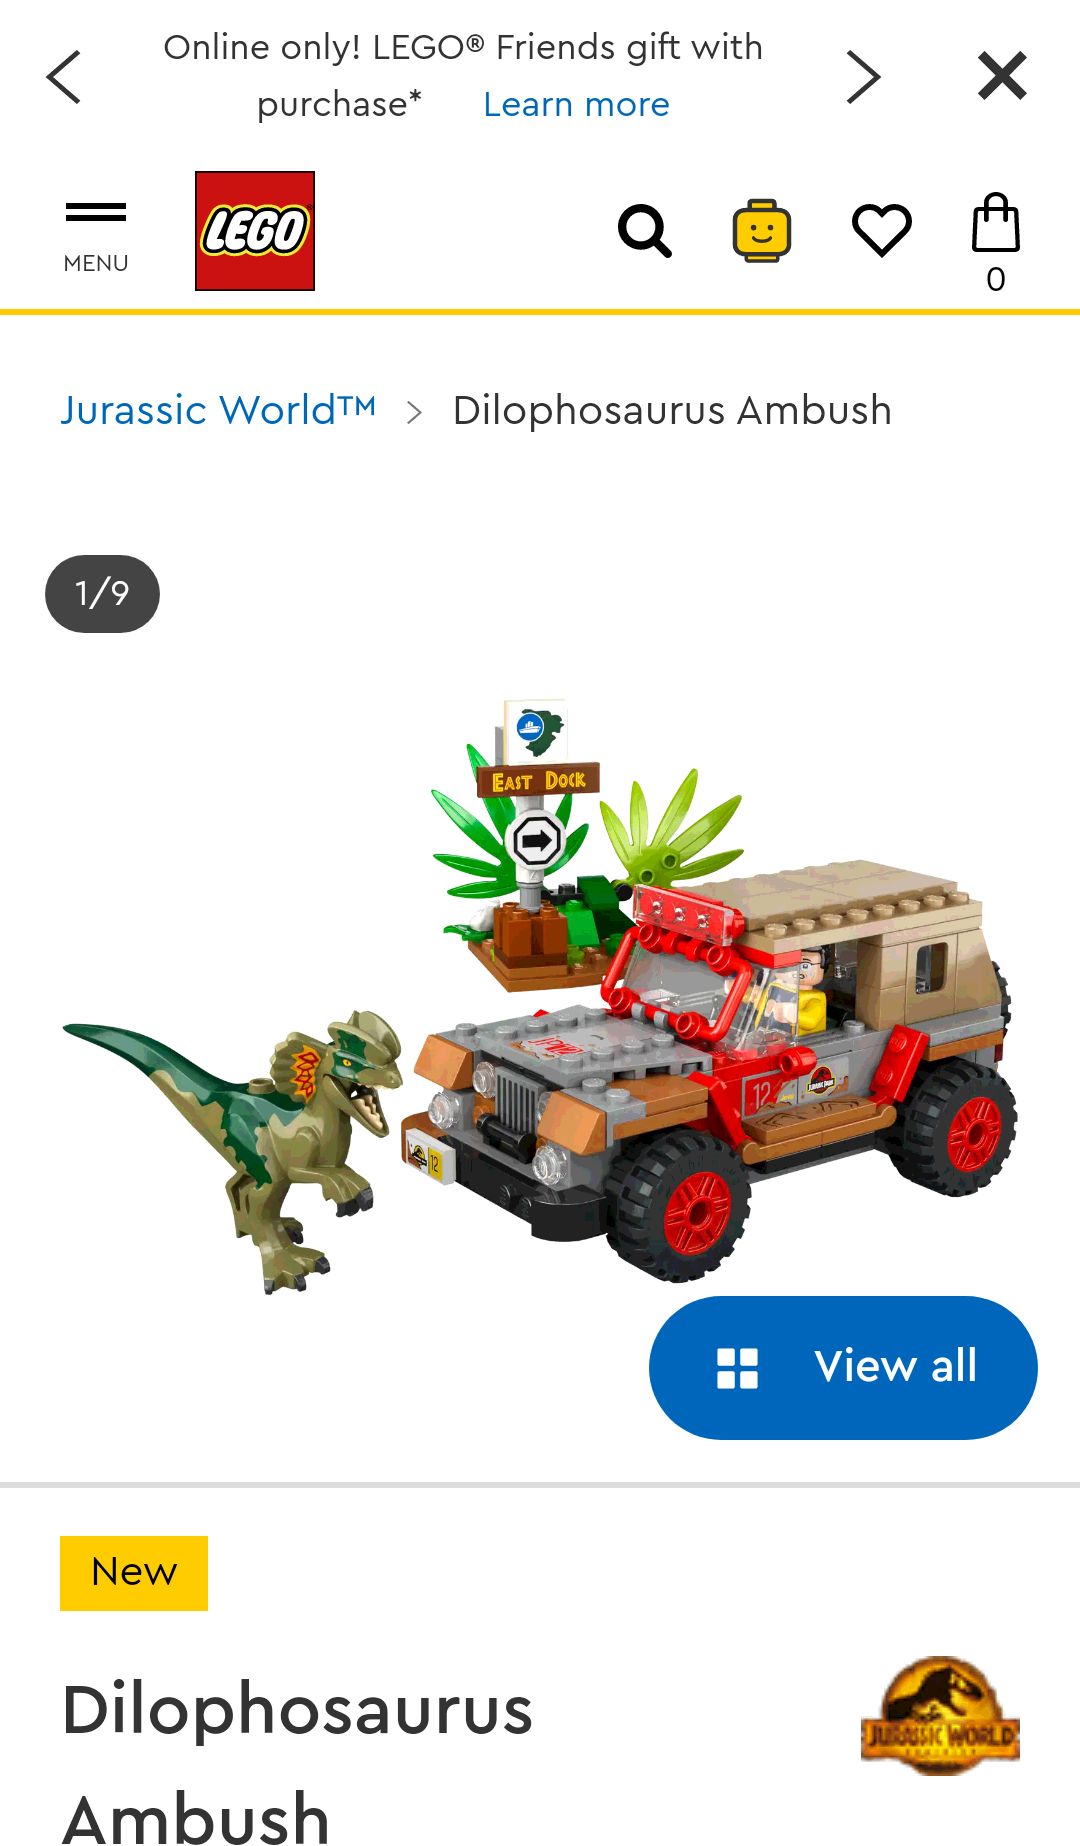 Dilophosaurus Ambush 76958 | Jurassic World™ | Buy online at the Official LEGO® Shop US